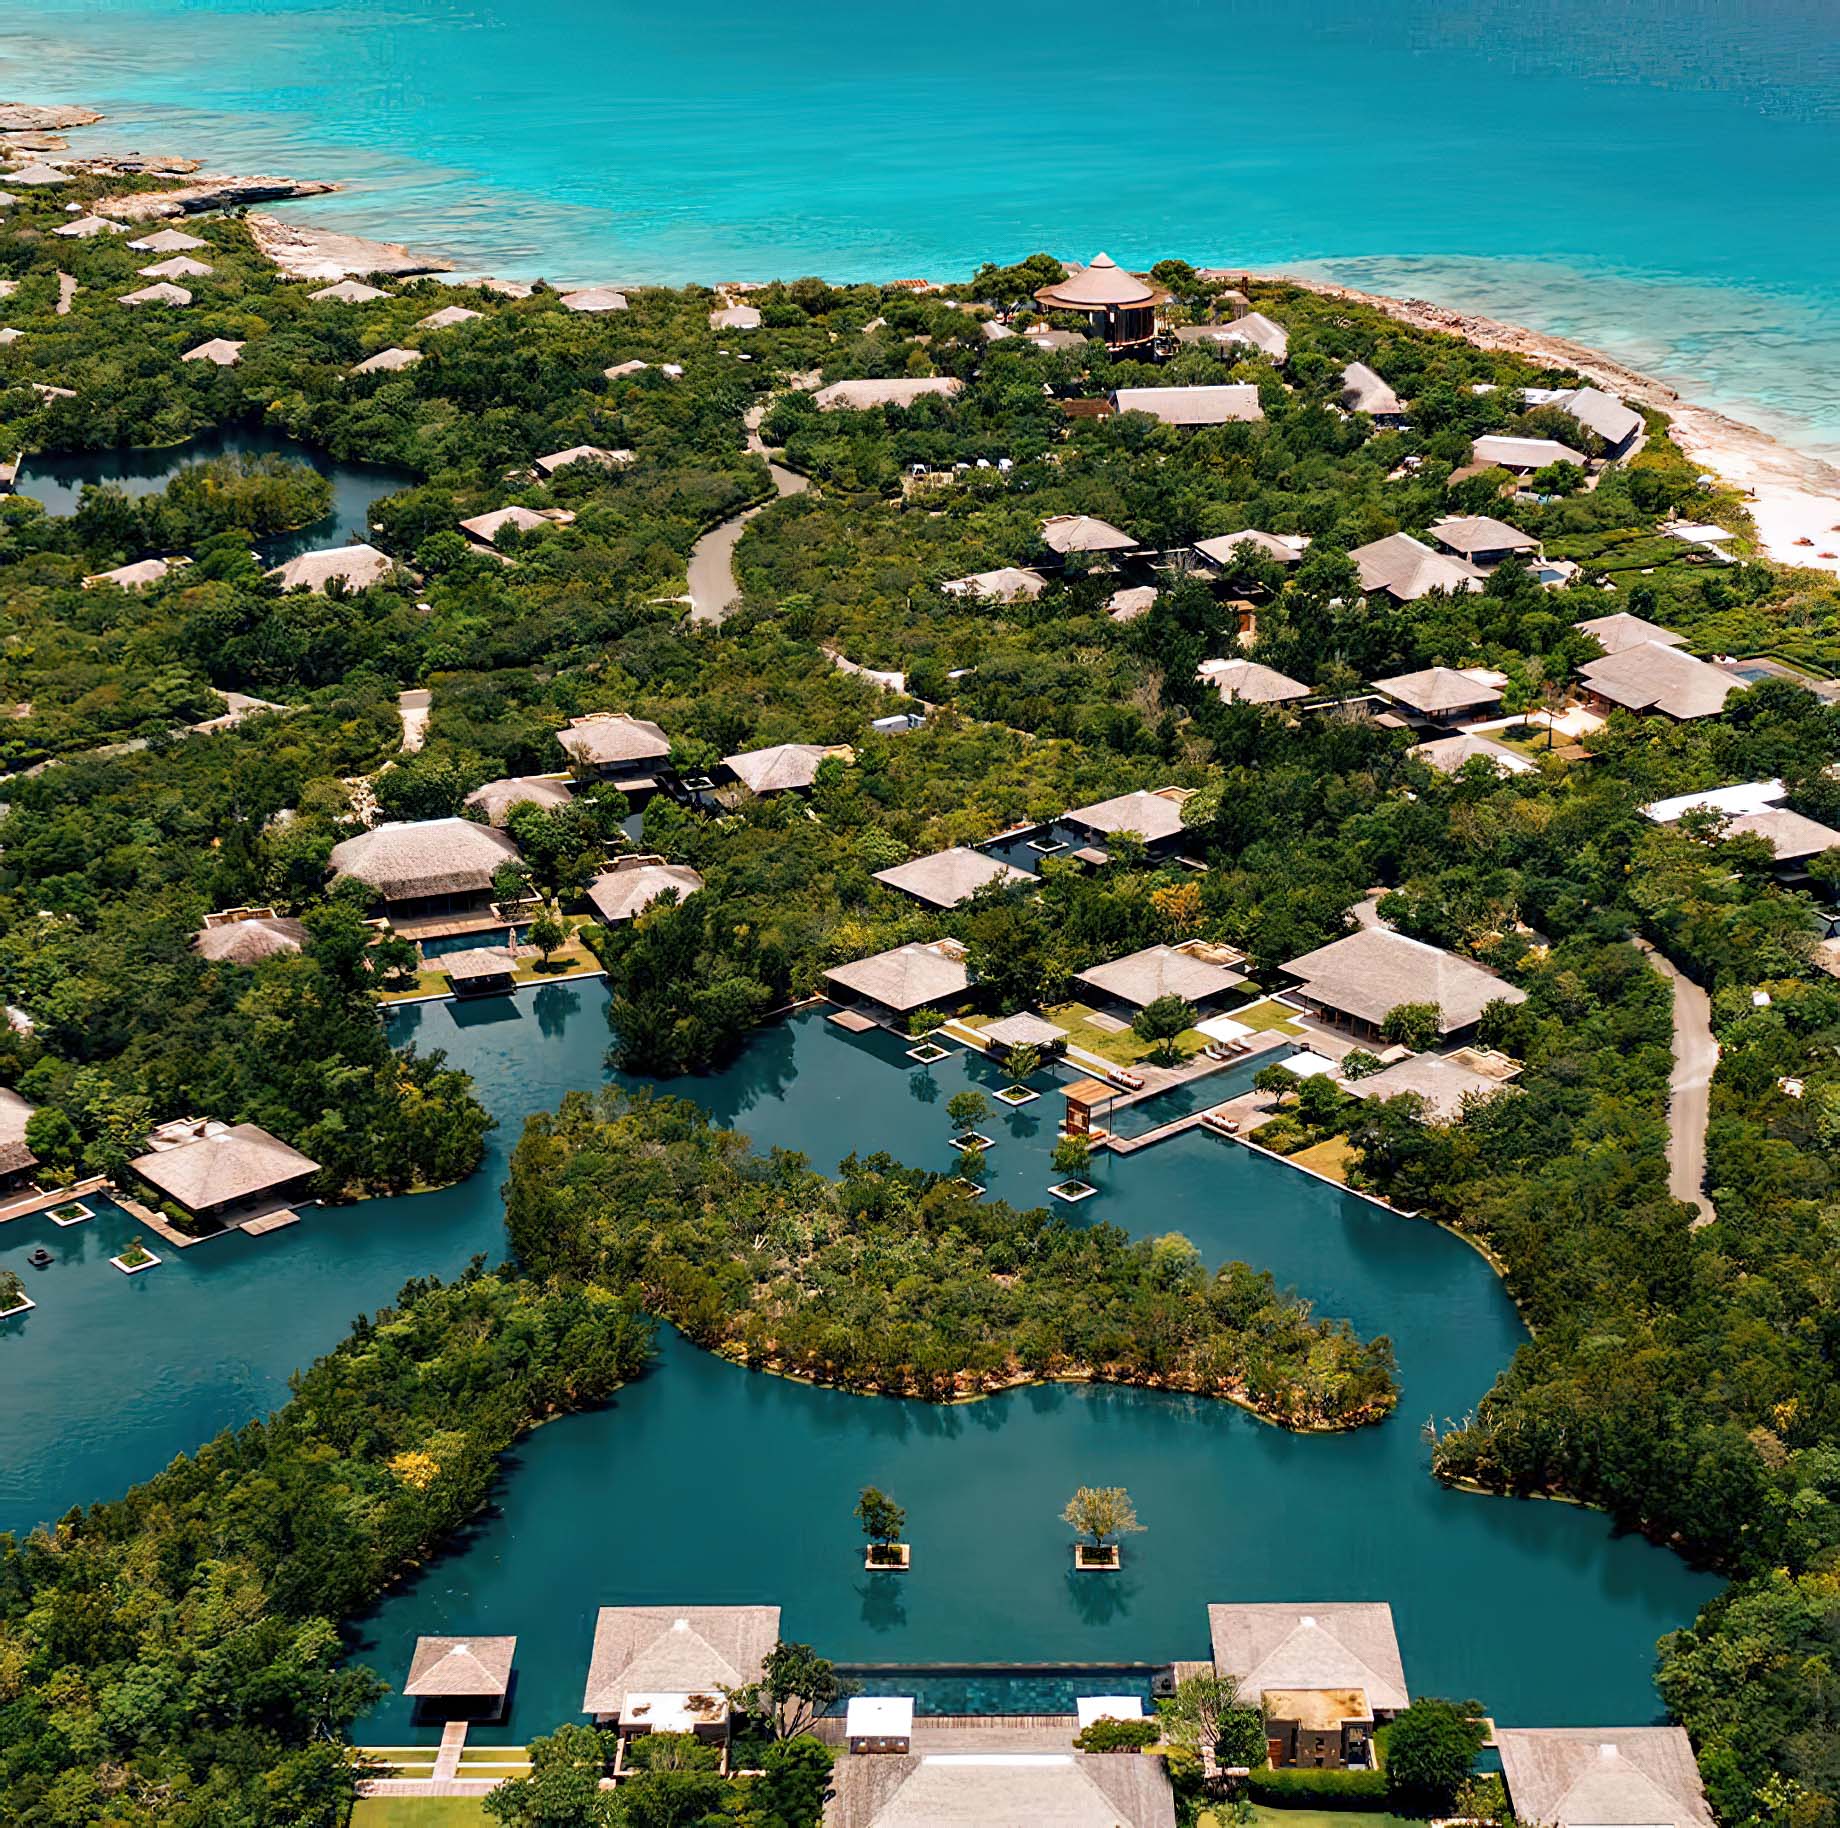 Amanyara Resort - Providenciales, Turks and Caicos Islands - Resort Aerial View